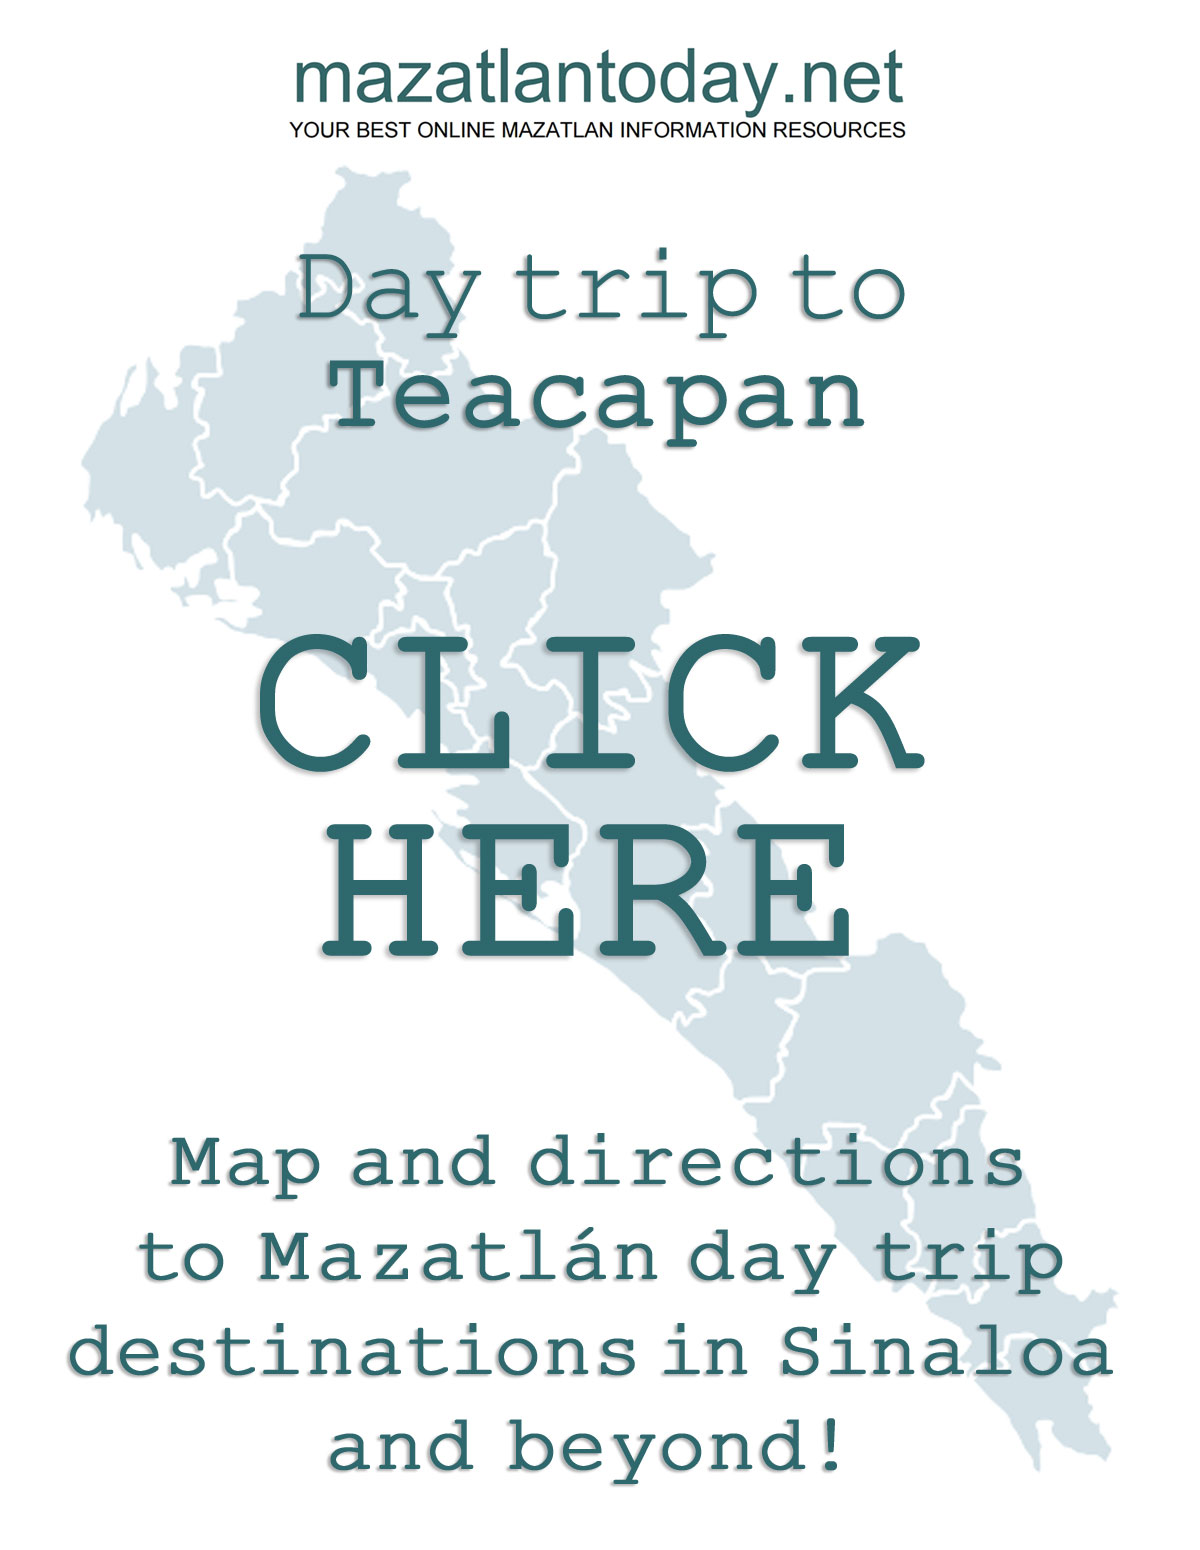 Download free Mazatlan - Teacapan day trip map and directions